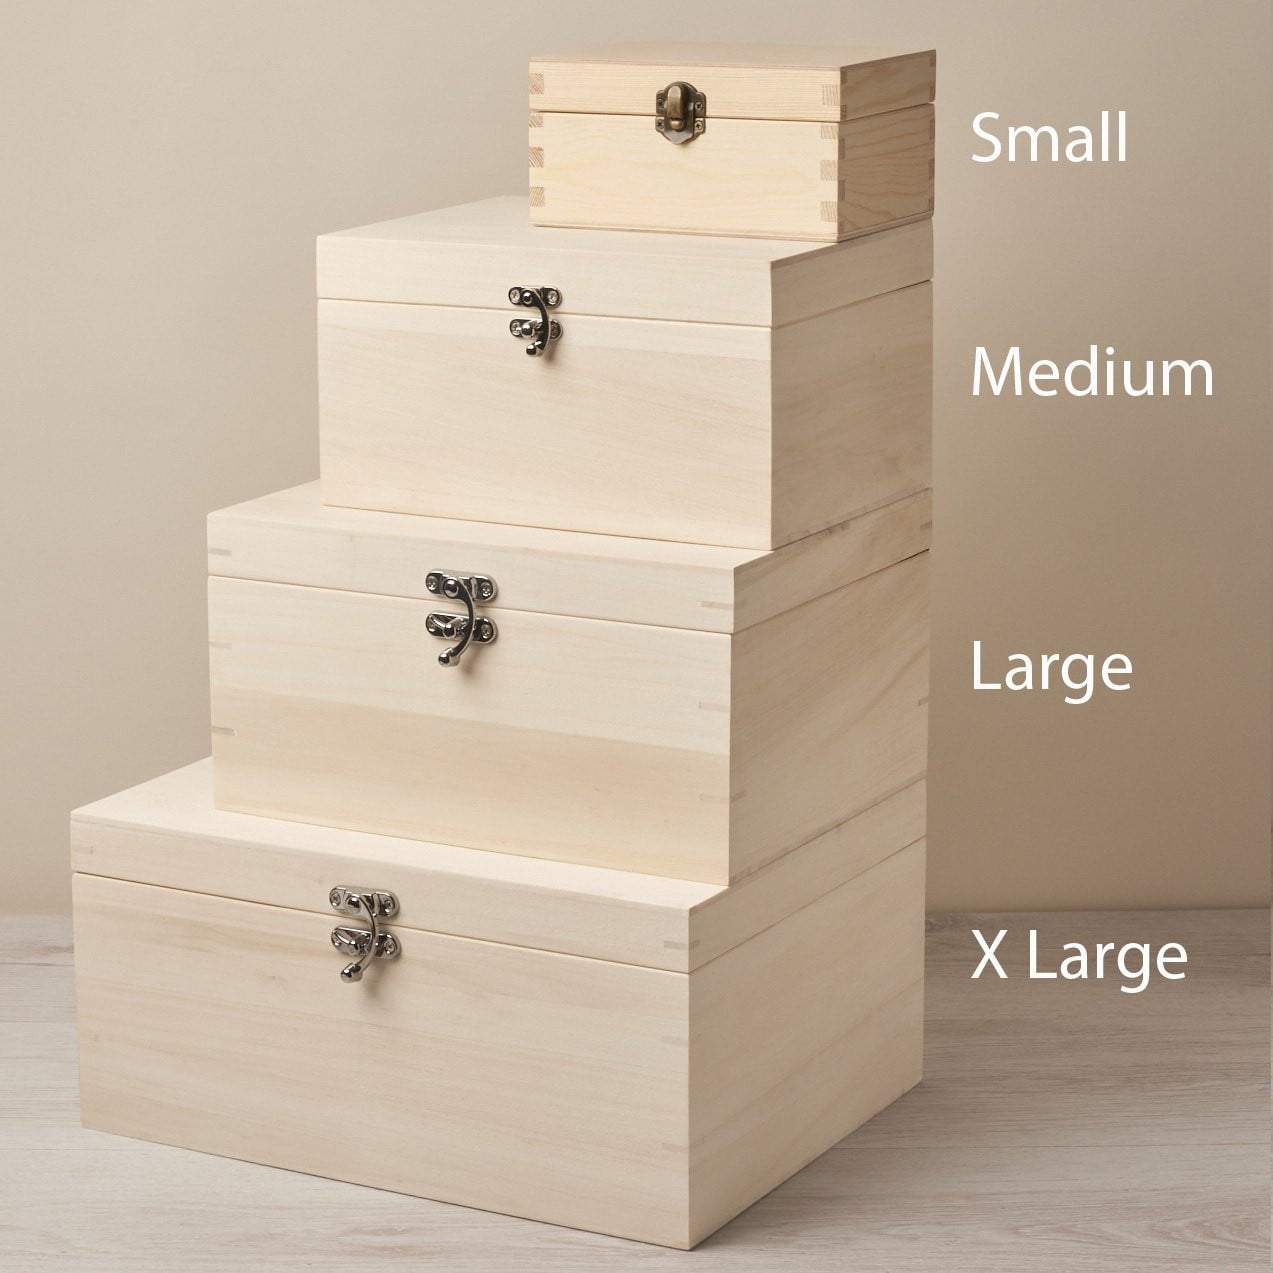 Keepsake Box - Personalised Wooden Pet Memorial Keepsake Box - Large Paw